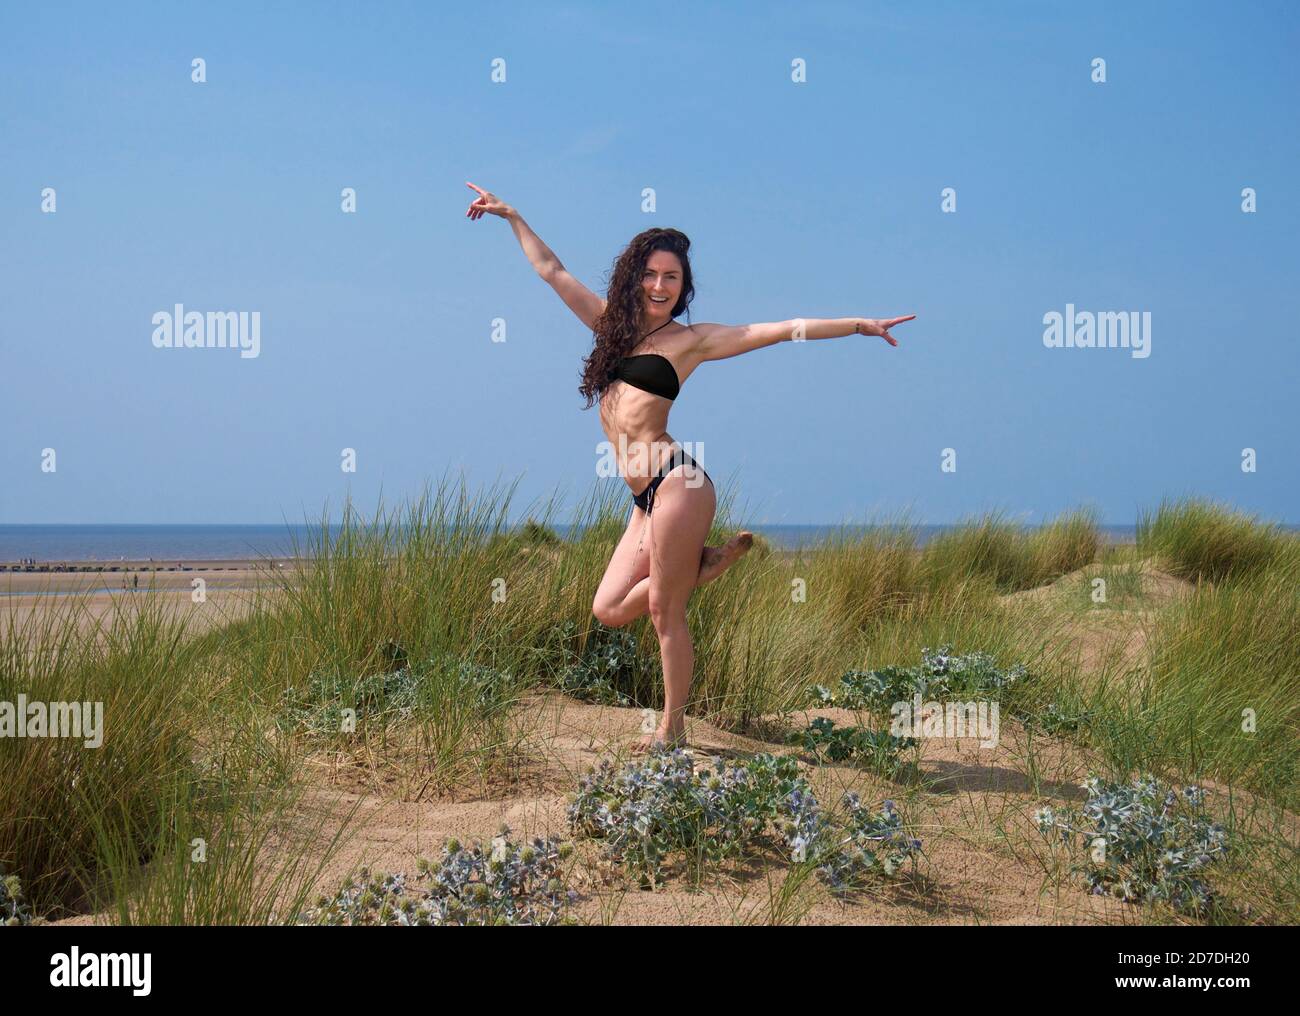 Mid-thirties woman in black bikini posing on sand dune Stock Photo